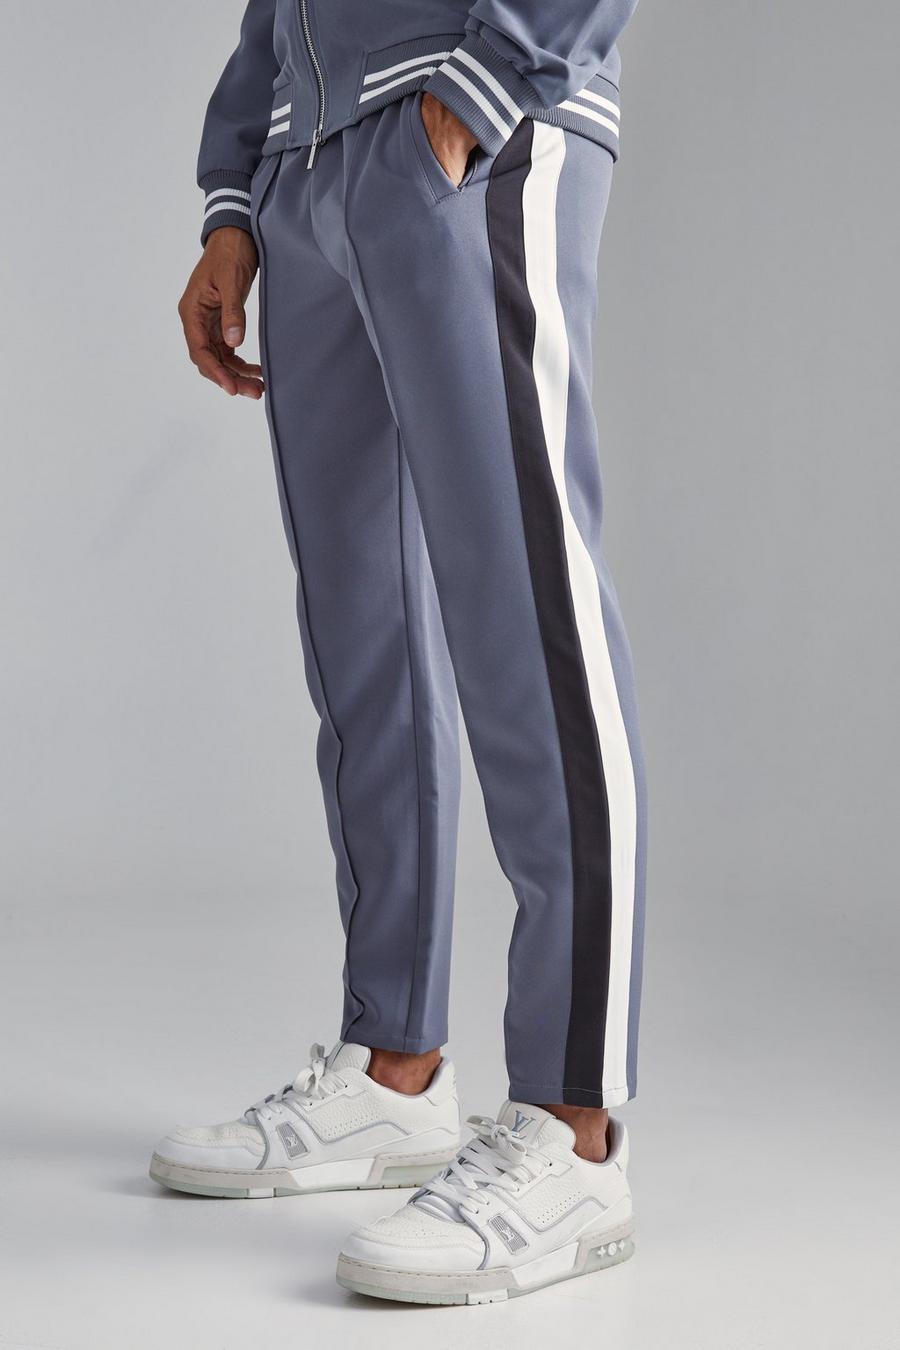 Pantaloni sartoriali stile Varsity, Charcoal